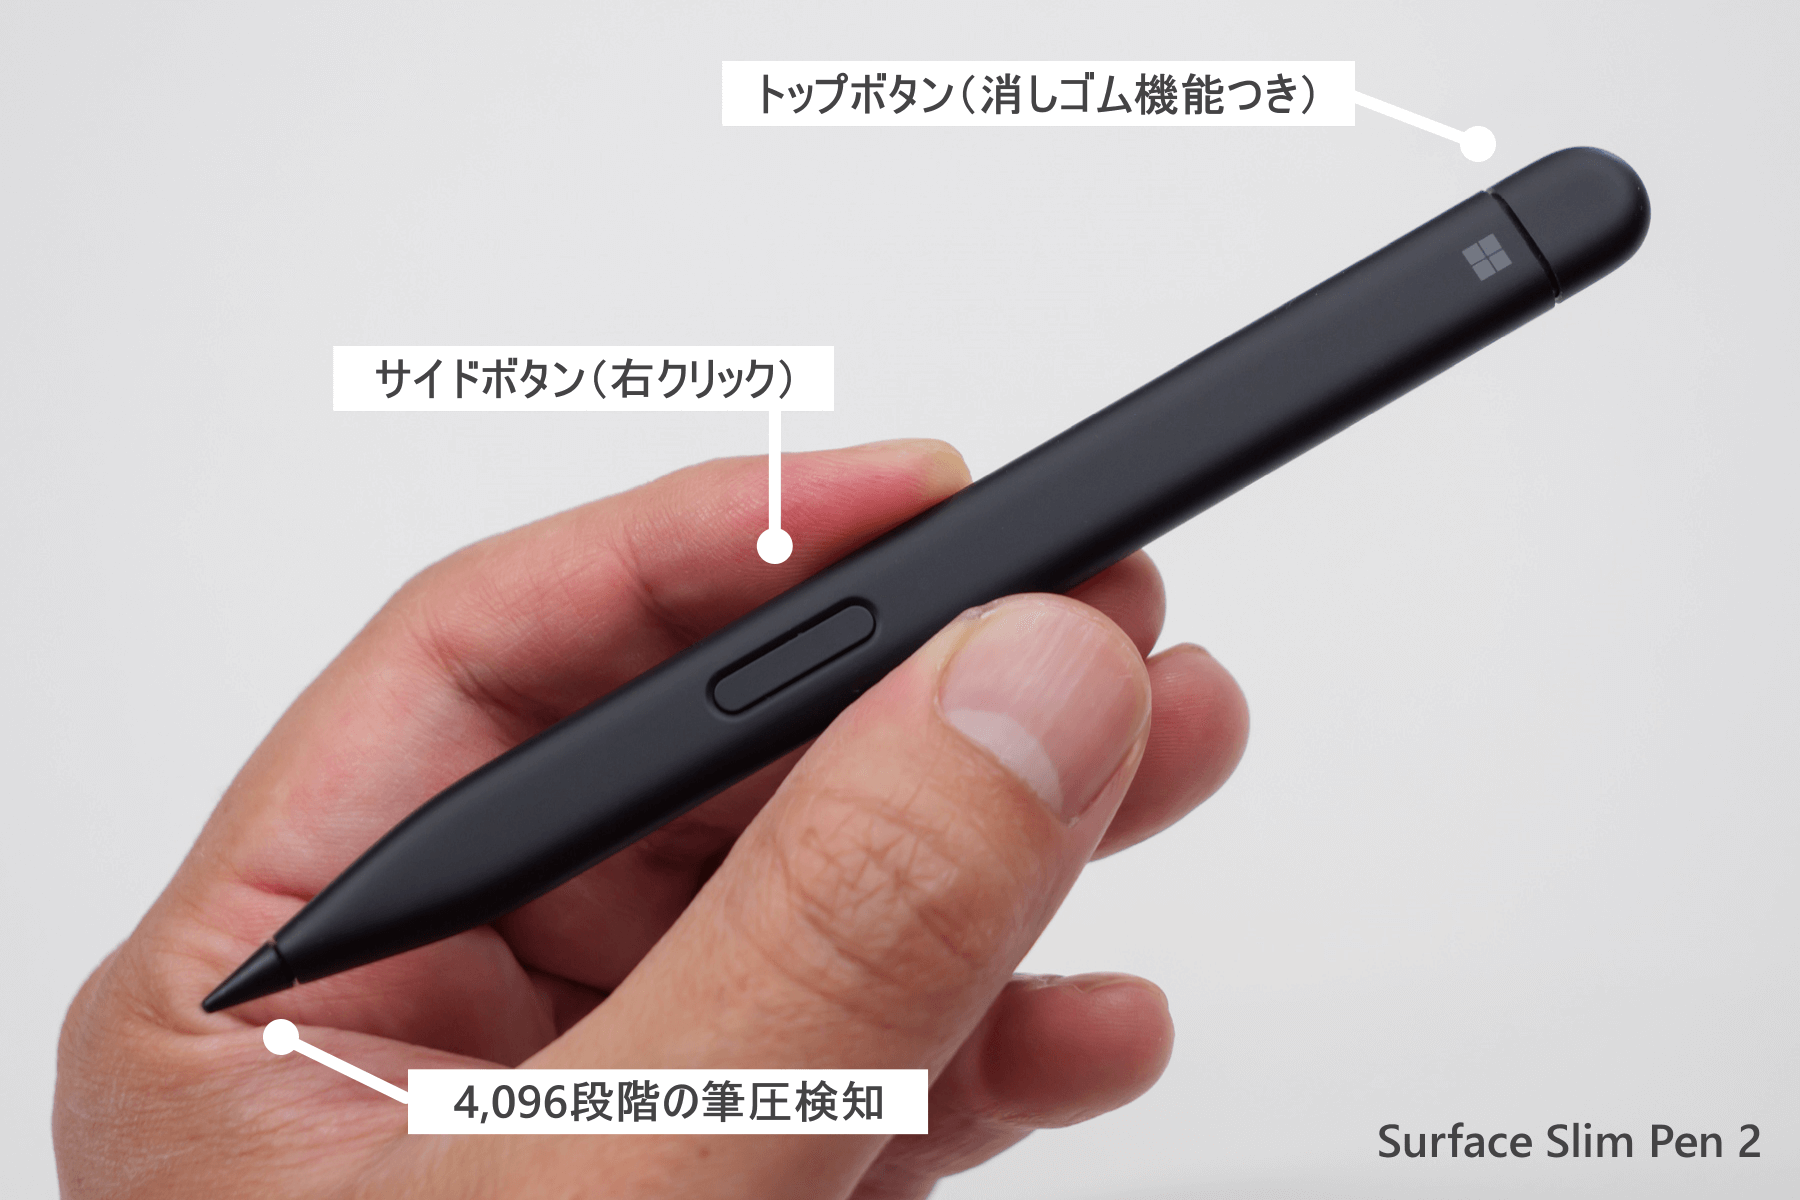 Surface Slim Pen 2 のボタンと主な機能